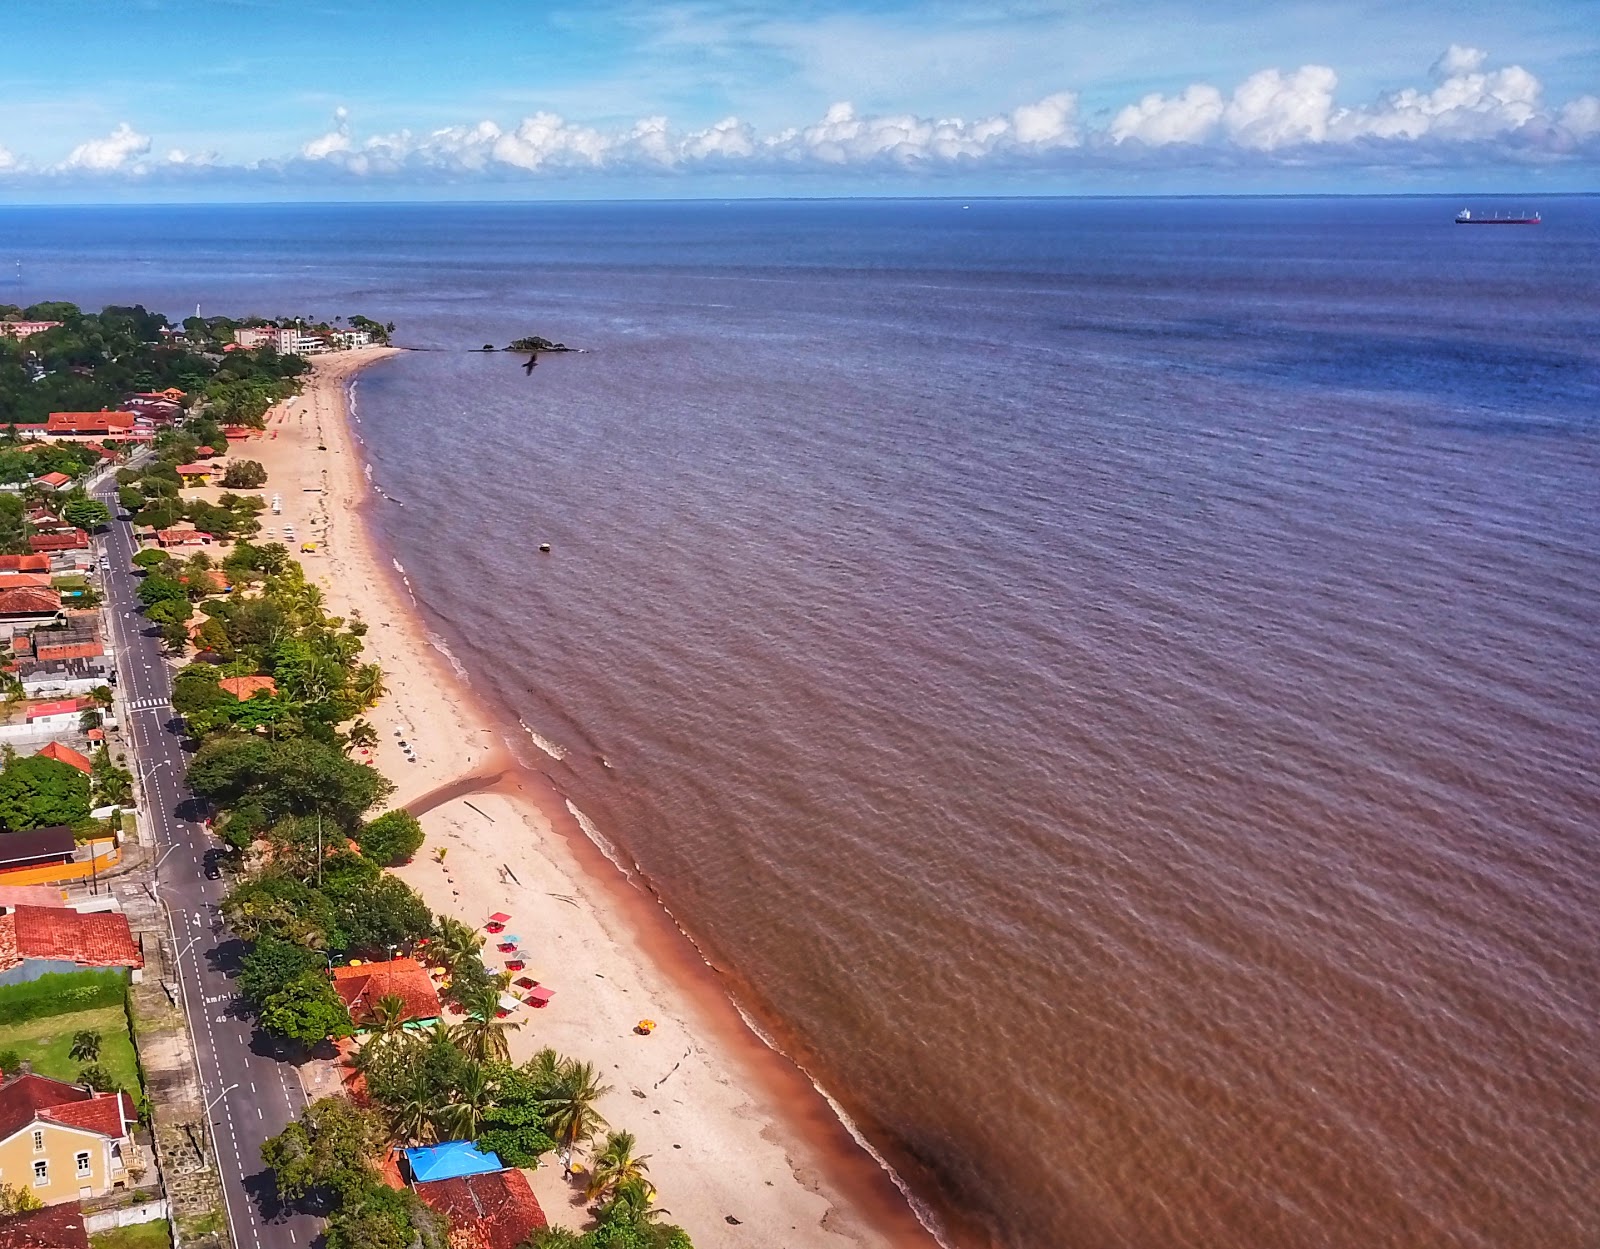 Foto de Praia do Chapeu Virado con recta y larga